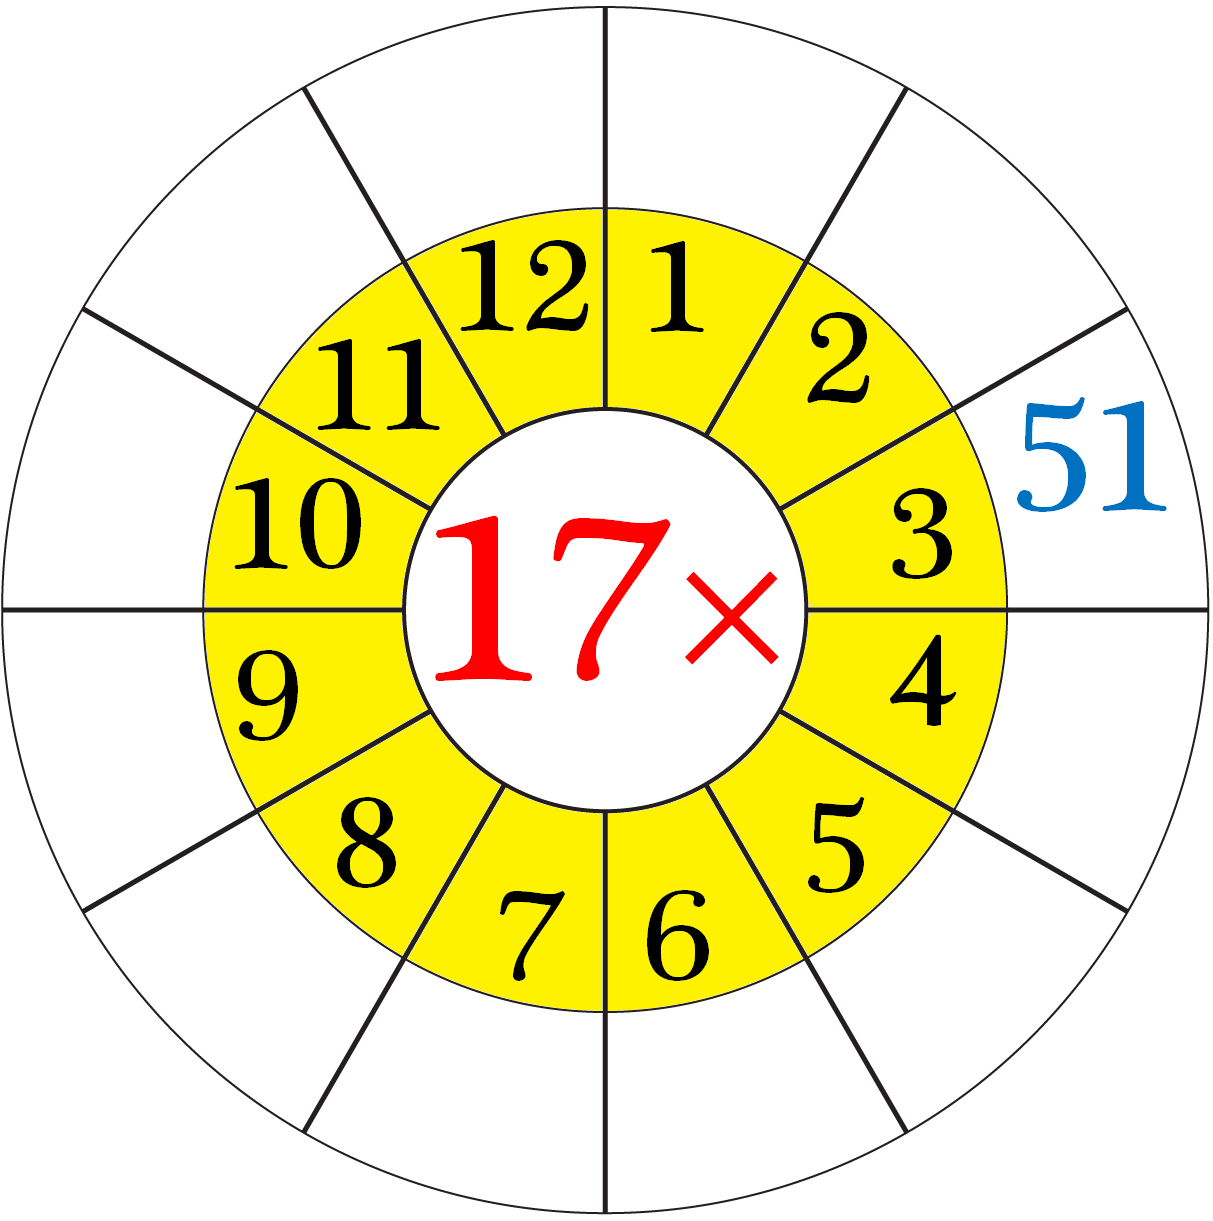 Worksheet on Multiplication Table of 17